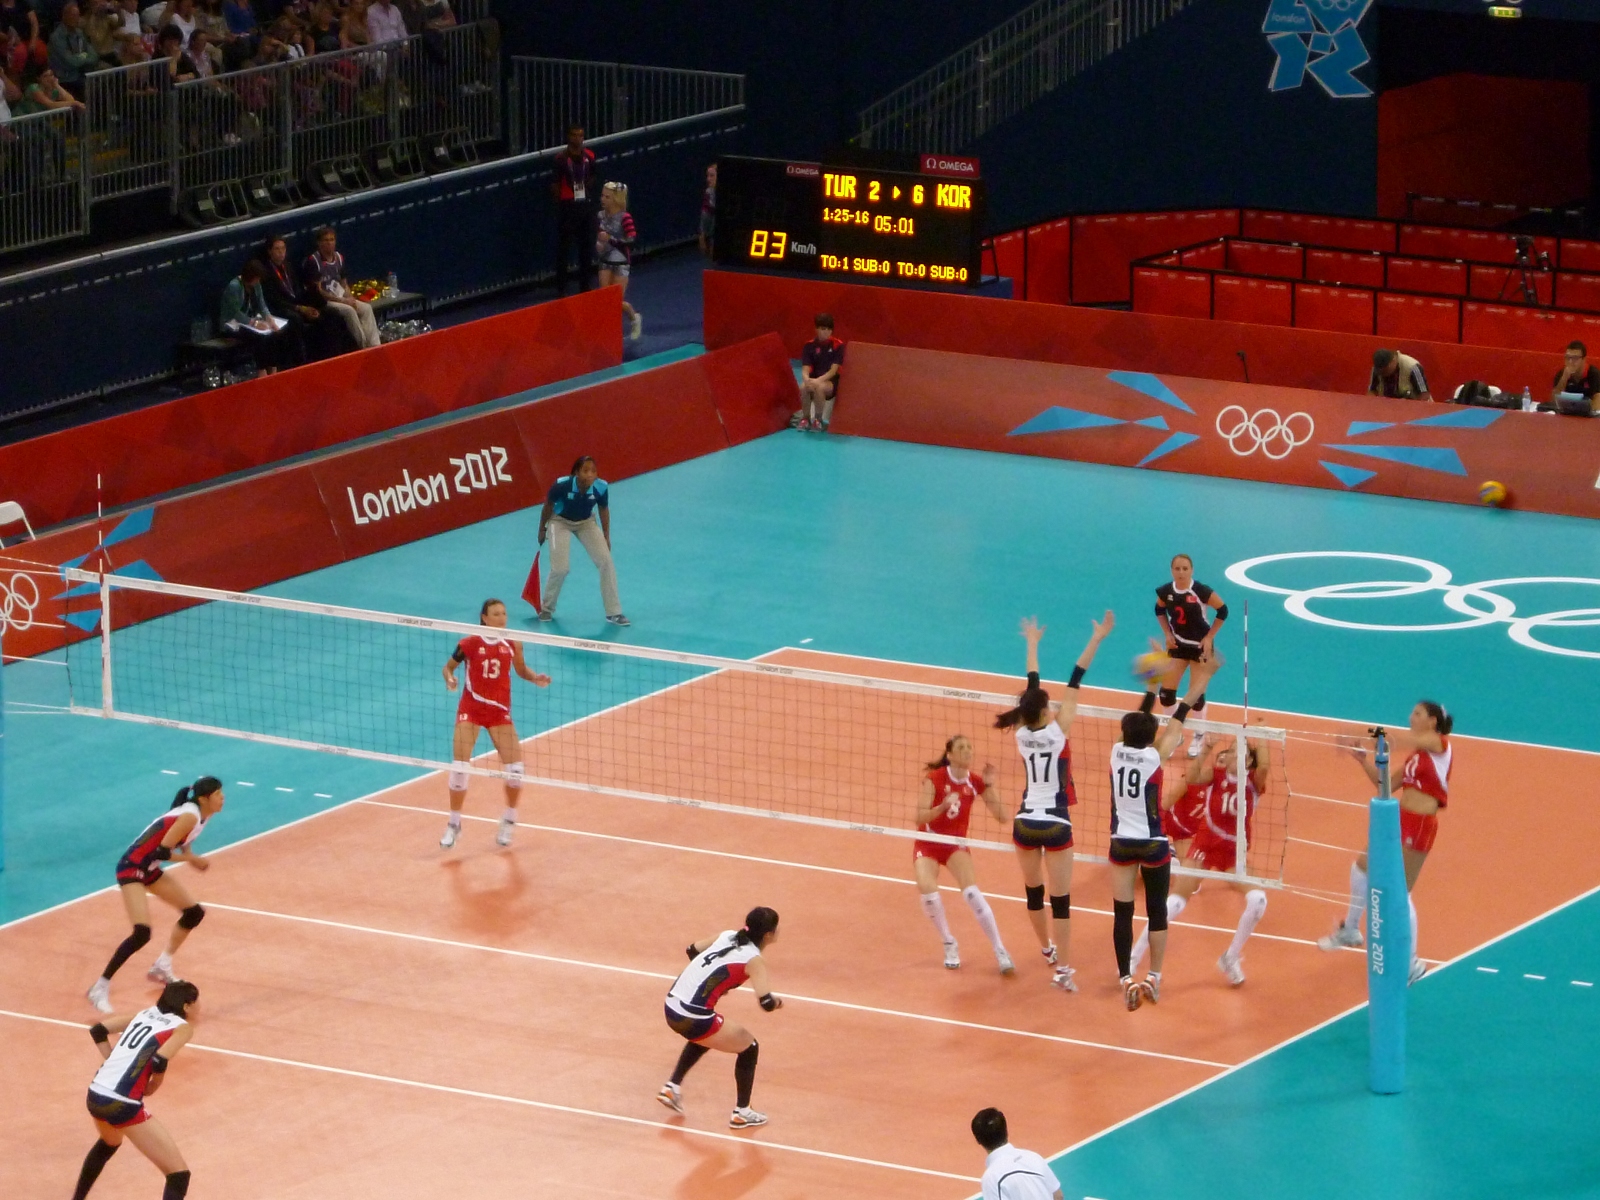 Women’s Volleyball – London Olympics | penguino